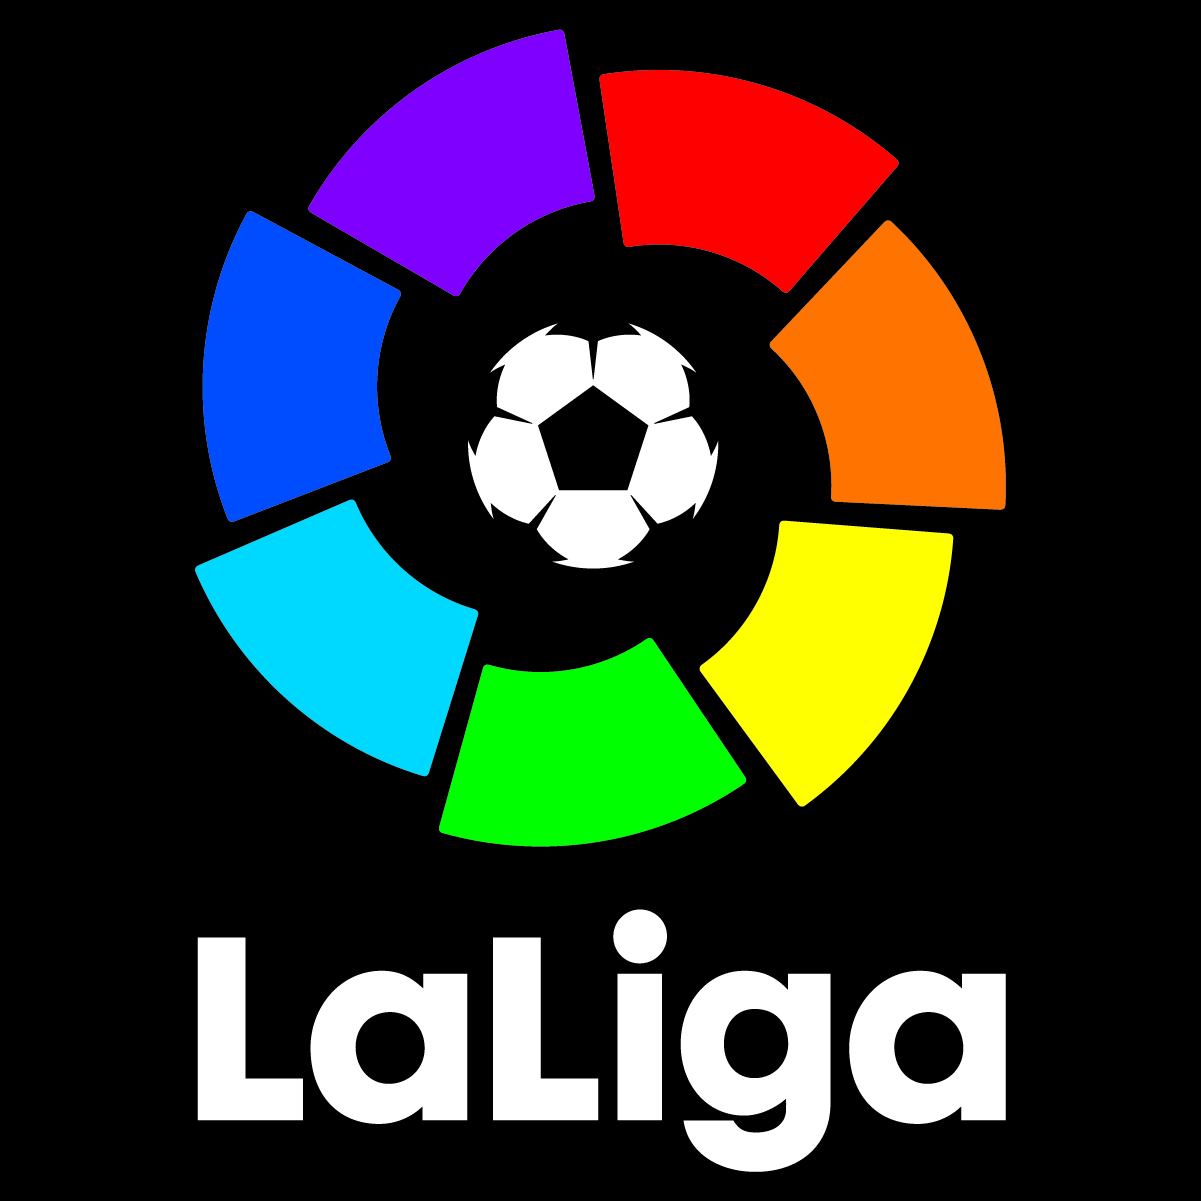 Футбольная ла лига. Испания ла лига логотипы. Эмблема чемпионата Испании по футболу. Ла лига Чемпионат Испании лого. Испанская лига лого.